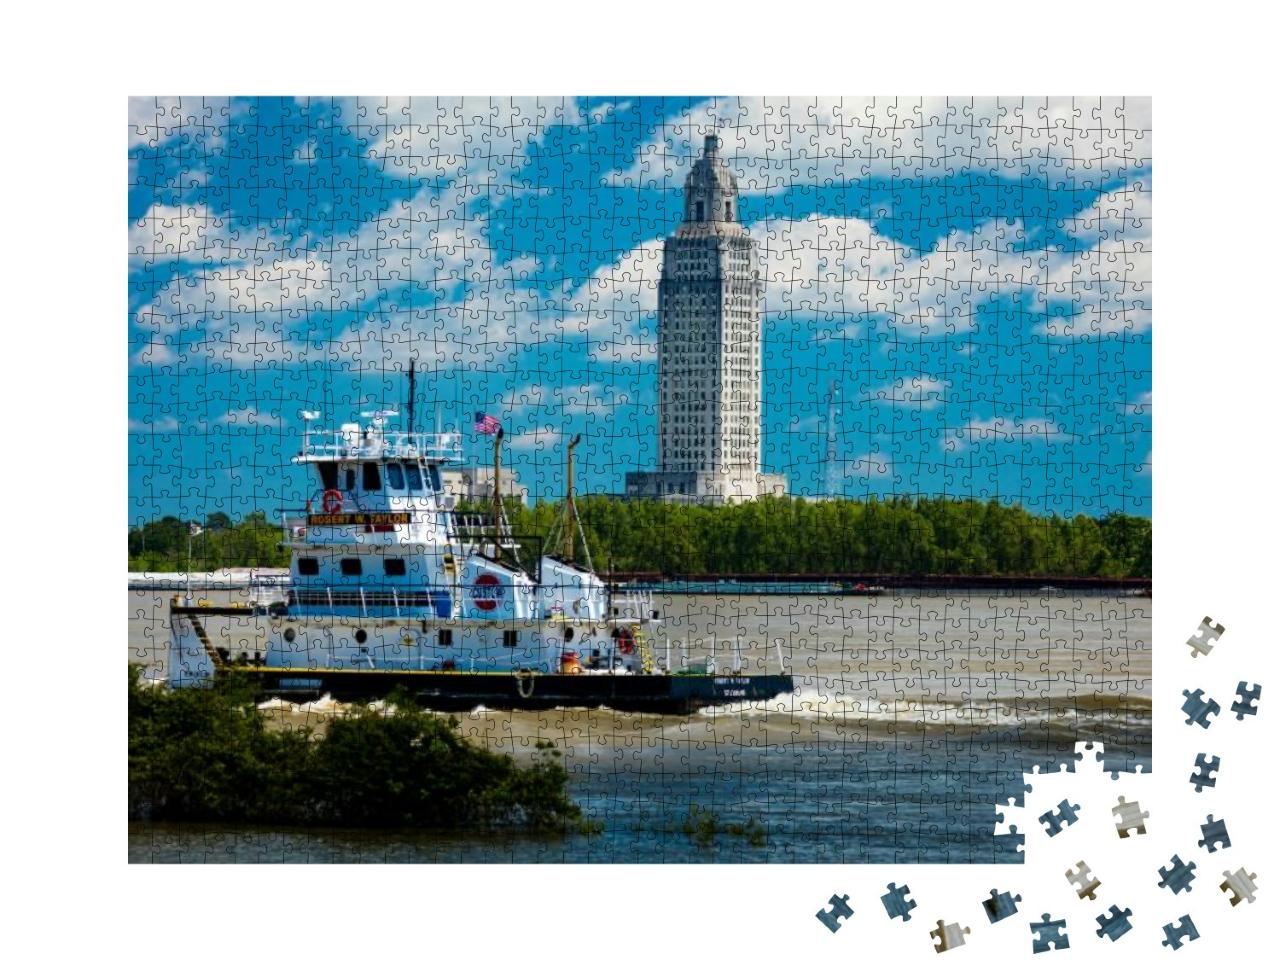 4/29, 2019, Baton Rouge, La, USA - Baton Rouge, Louisiana... Jigsaw Puzzle with 1000 pieces